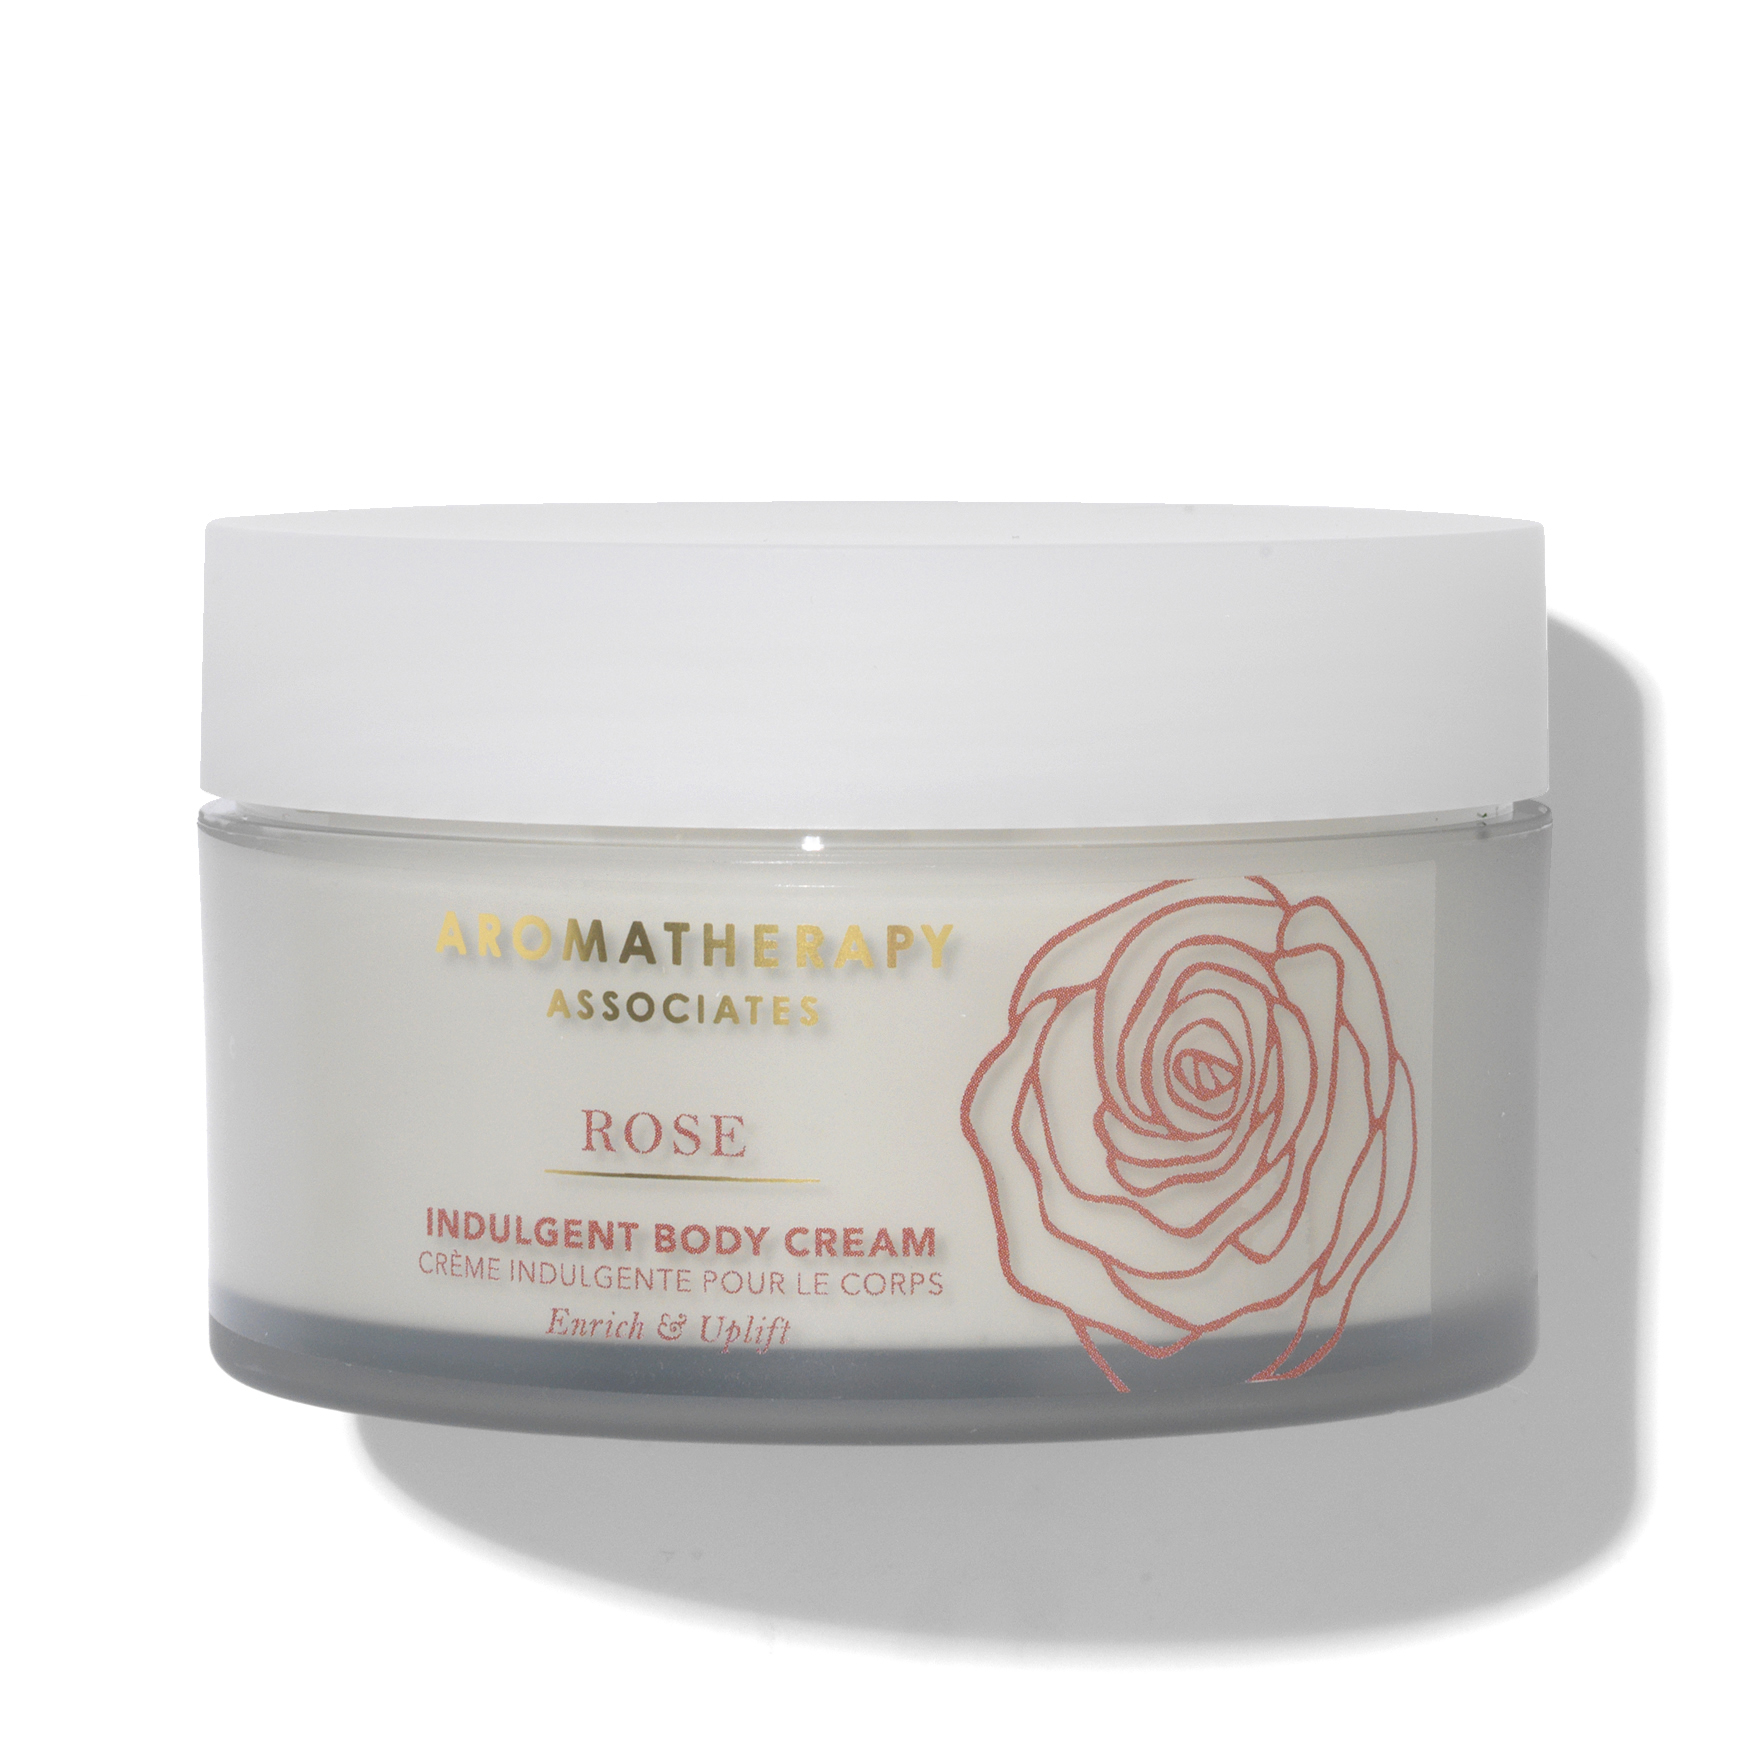 Aromatherapy Associates Rose Indulgent Body Cream | Space NK